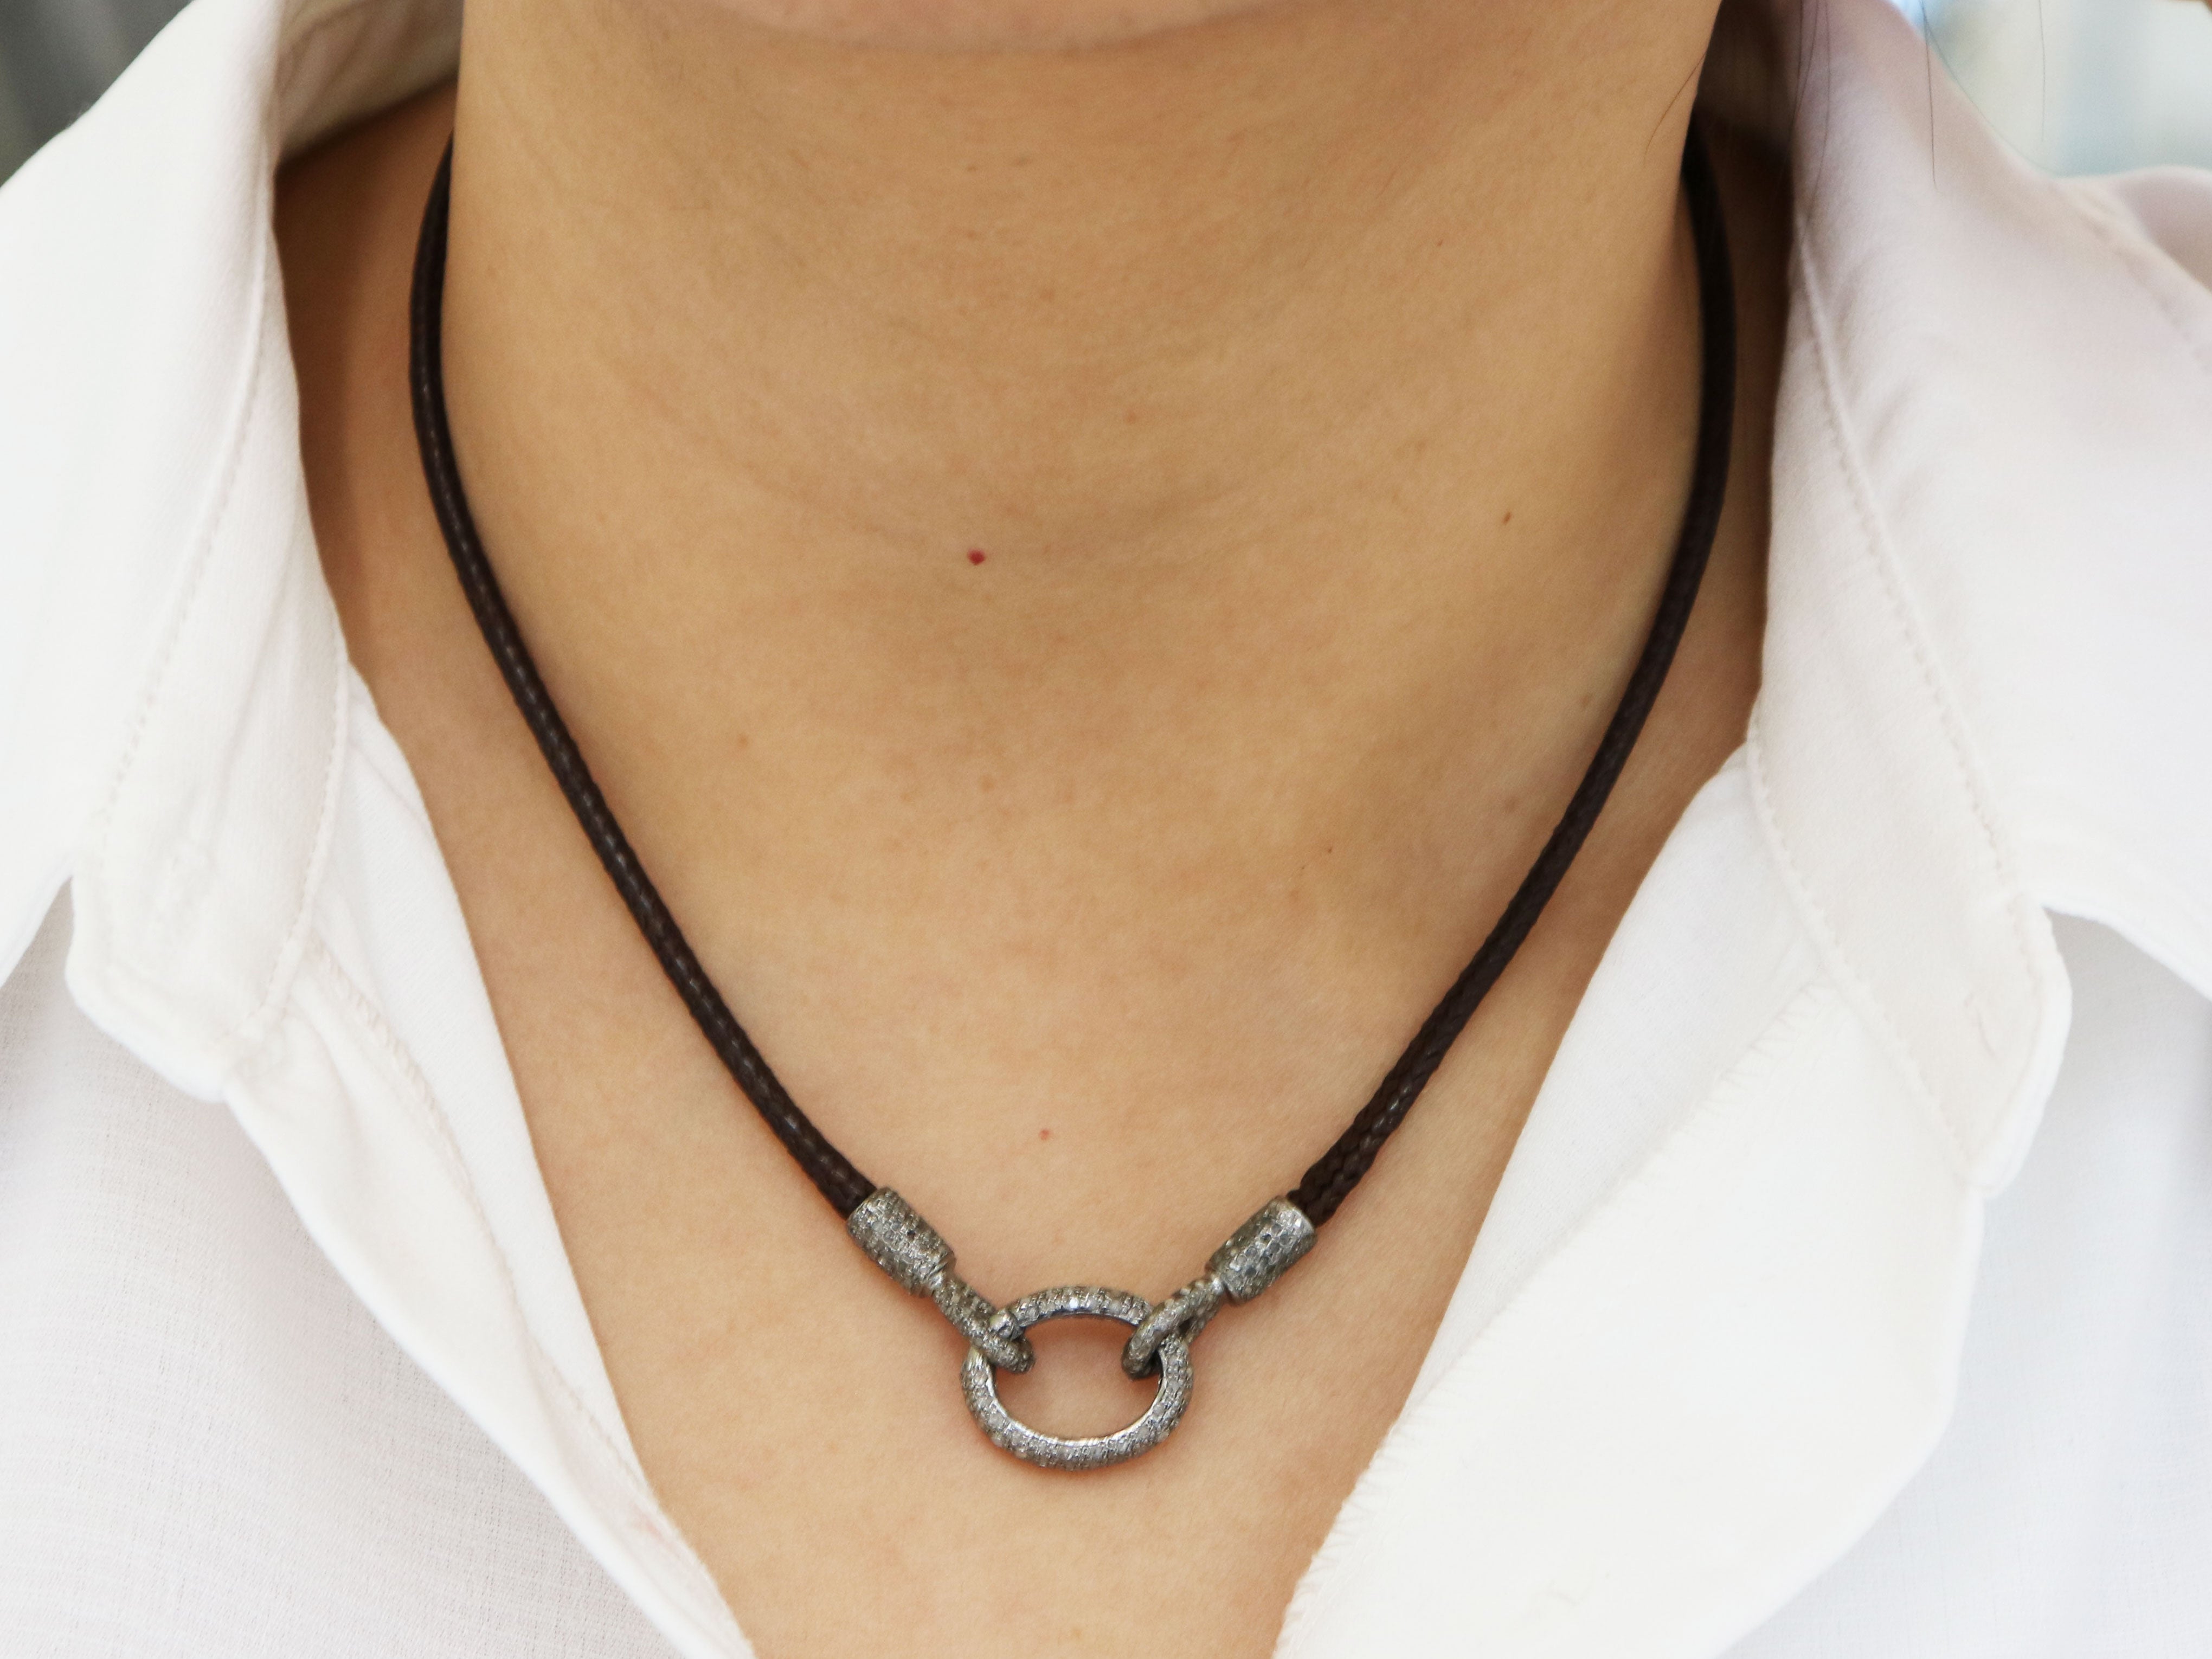 SERASAR Men's Leather Necklace with Pendant, 50 cm, Black, Leather Necklace  with Jewellery Box for Men, Genuine Leather, Gift for Men : Amazon.de:  Fashion